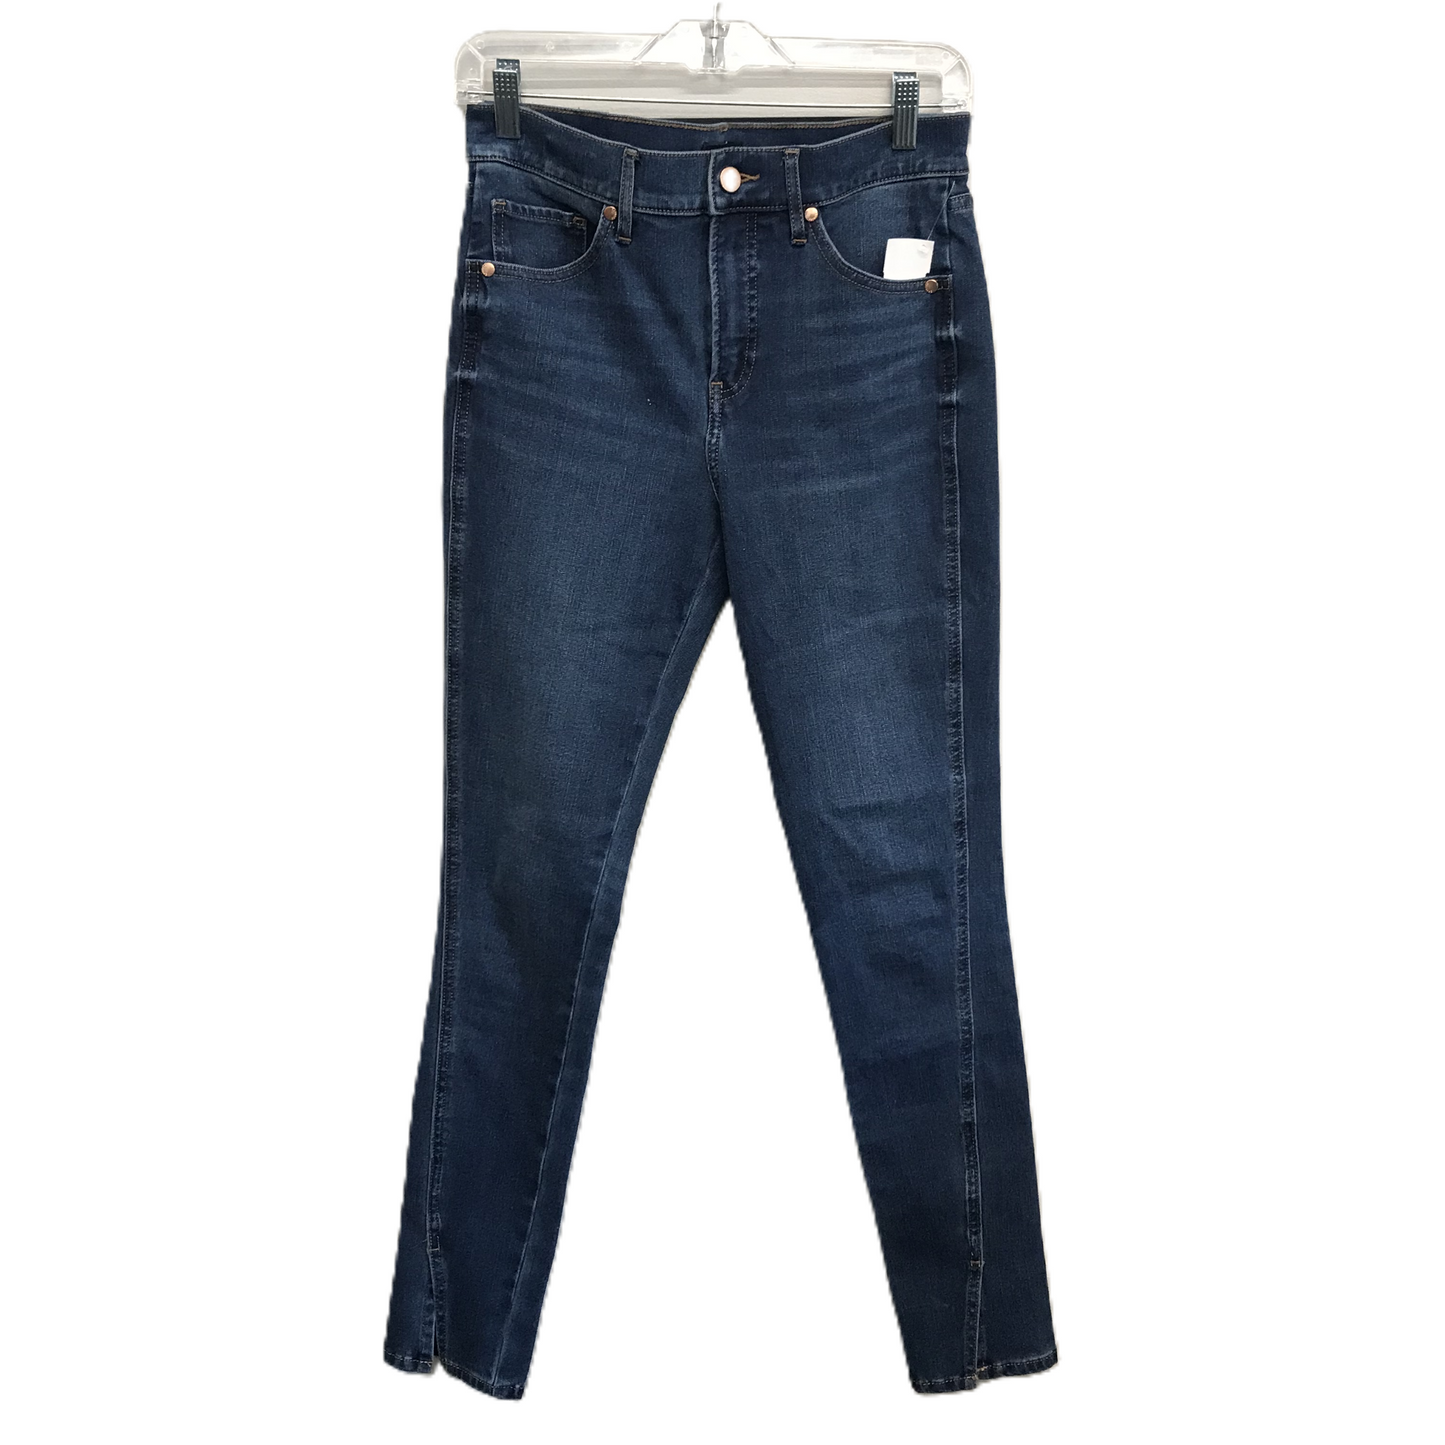 Blue Denim Jeans Skinny By Express, Size: 4